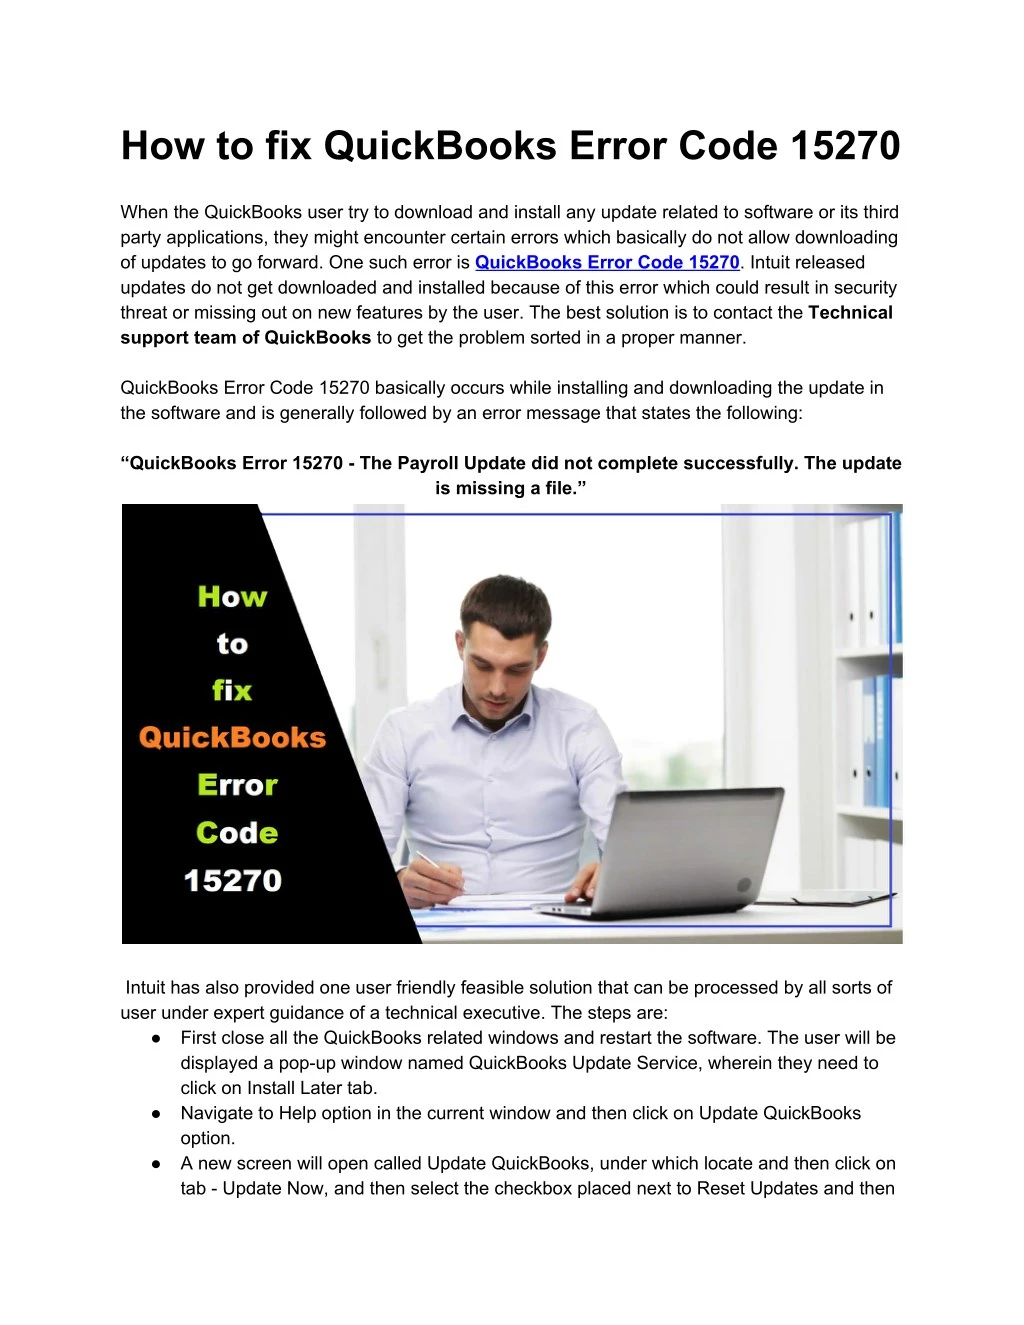 how to fix quickbooks error code 15270 when